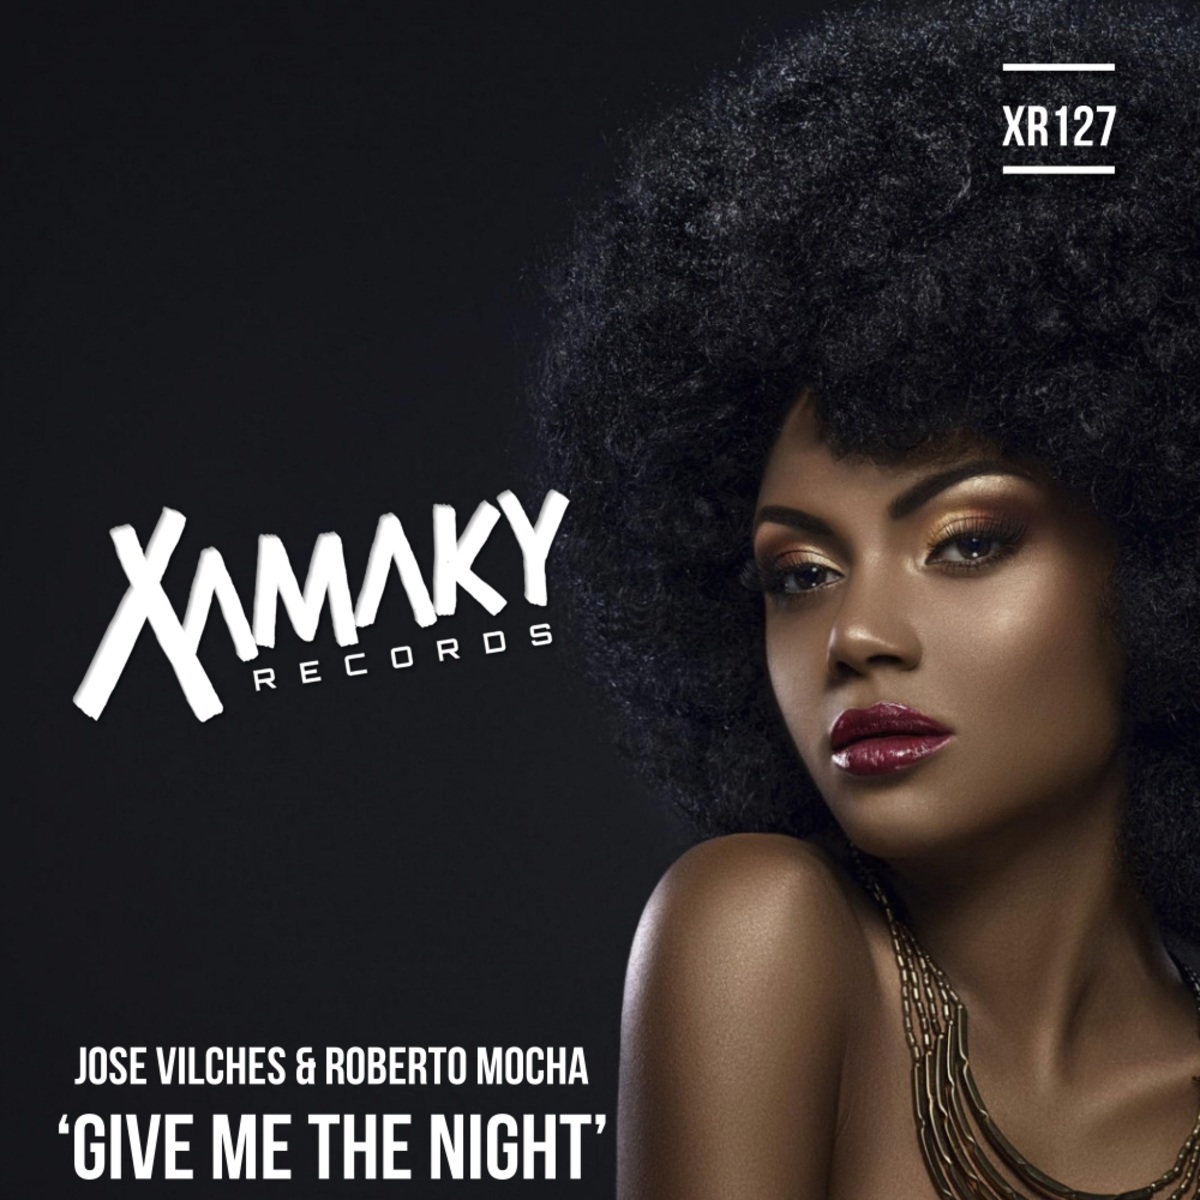 Jose Vilches & Roberto Mocha - Give Me The Night / Xamaky Records